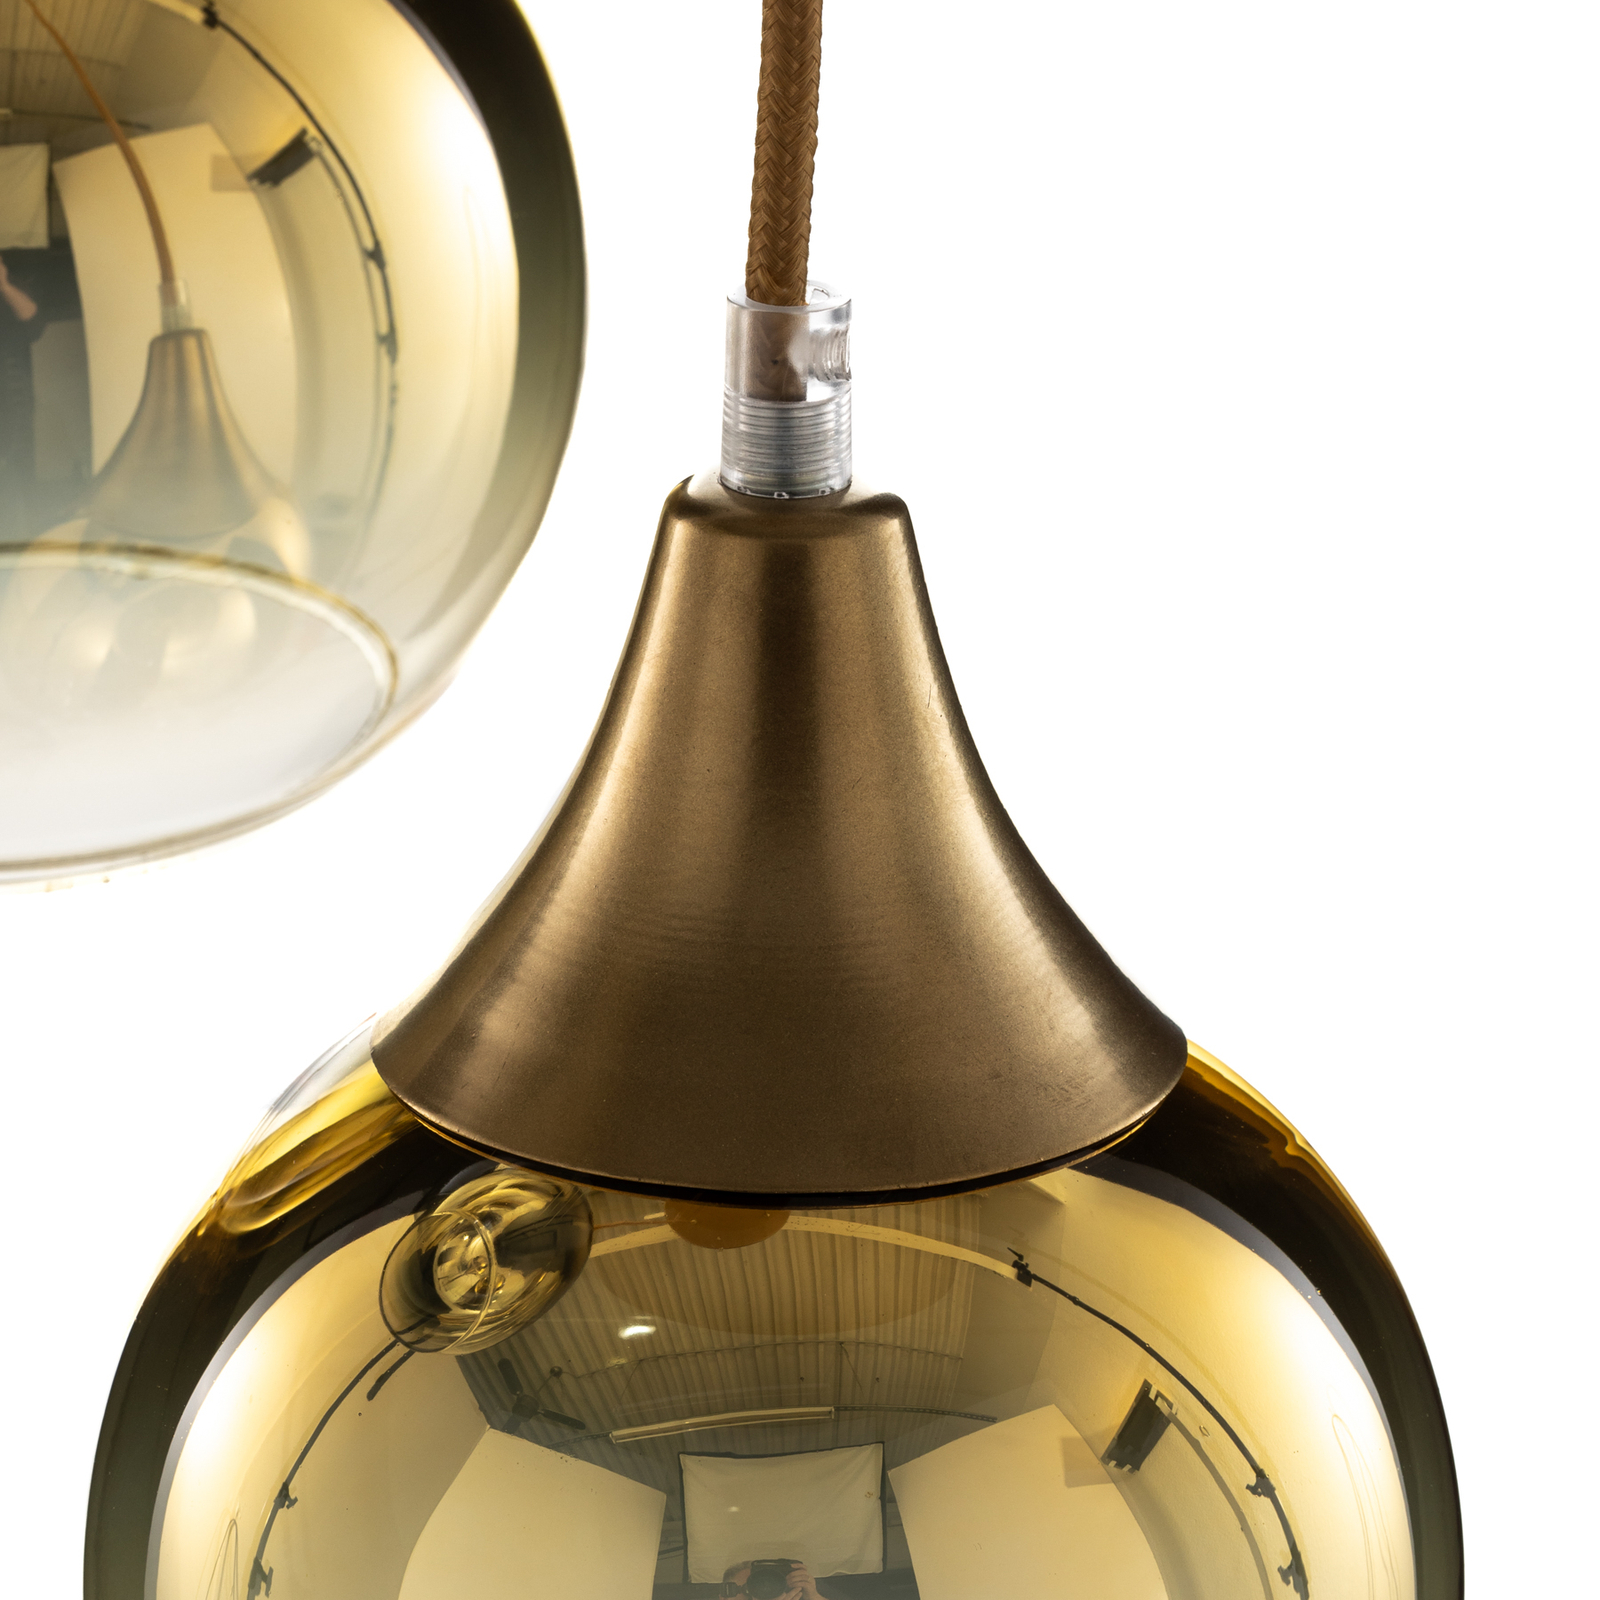 Hanglamp Monte, 3-lamps, rondel, goud